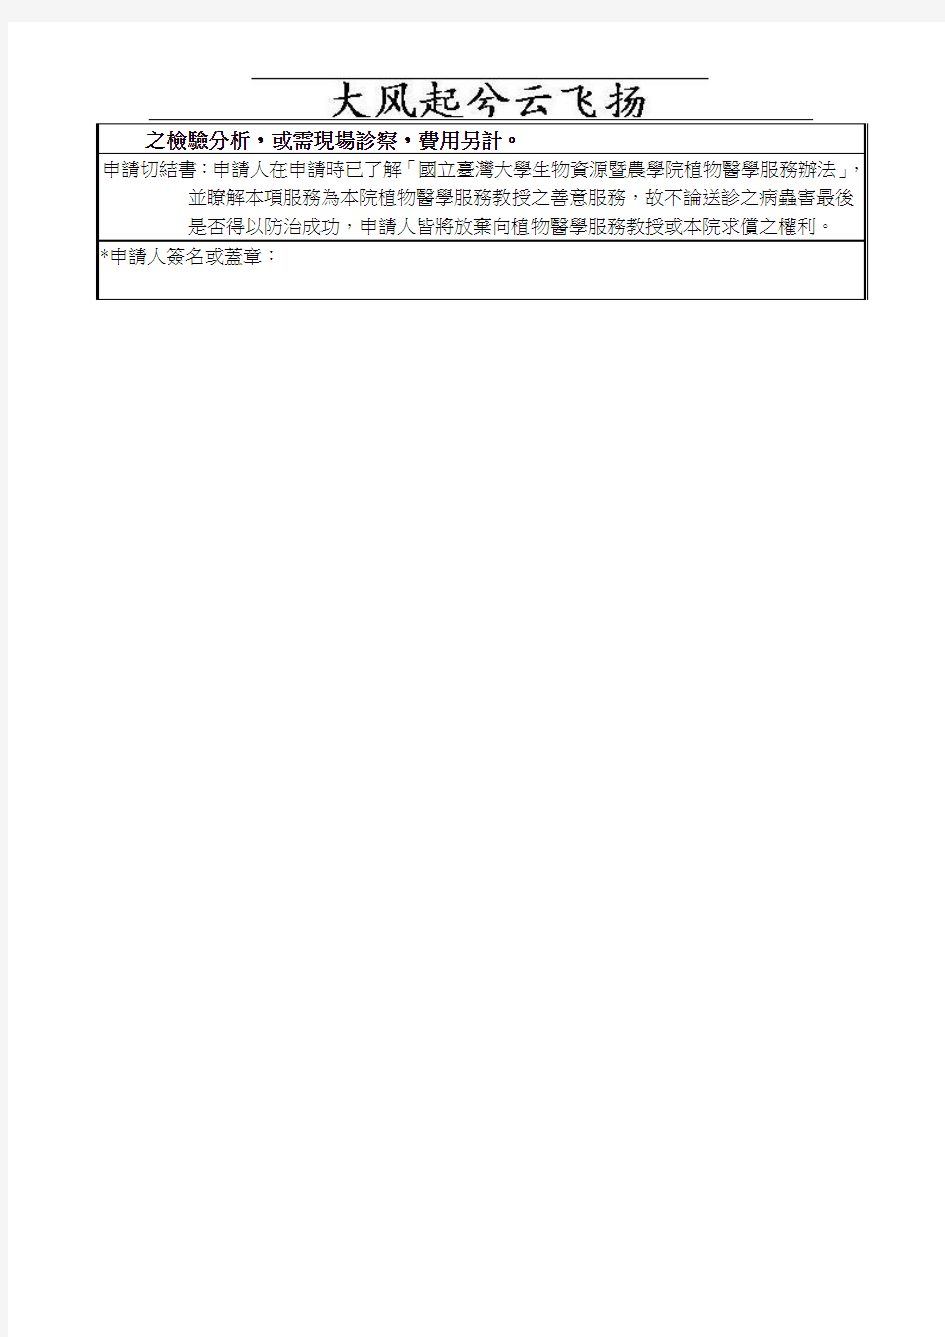 Mmuiqv国立台湾大学生物资源暨农学院植物医学服务申请书及背景资料表